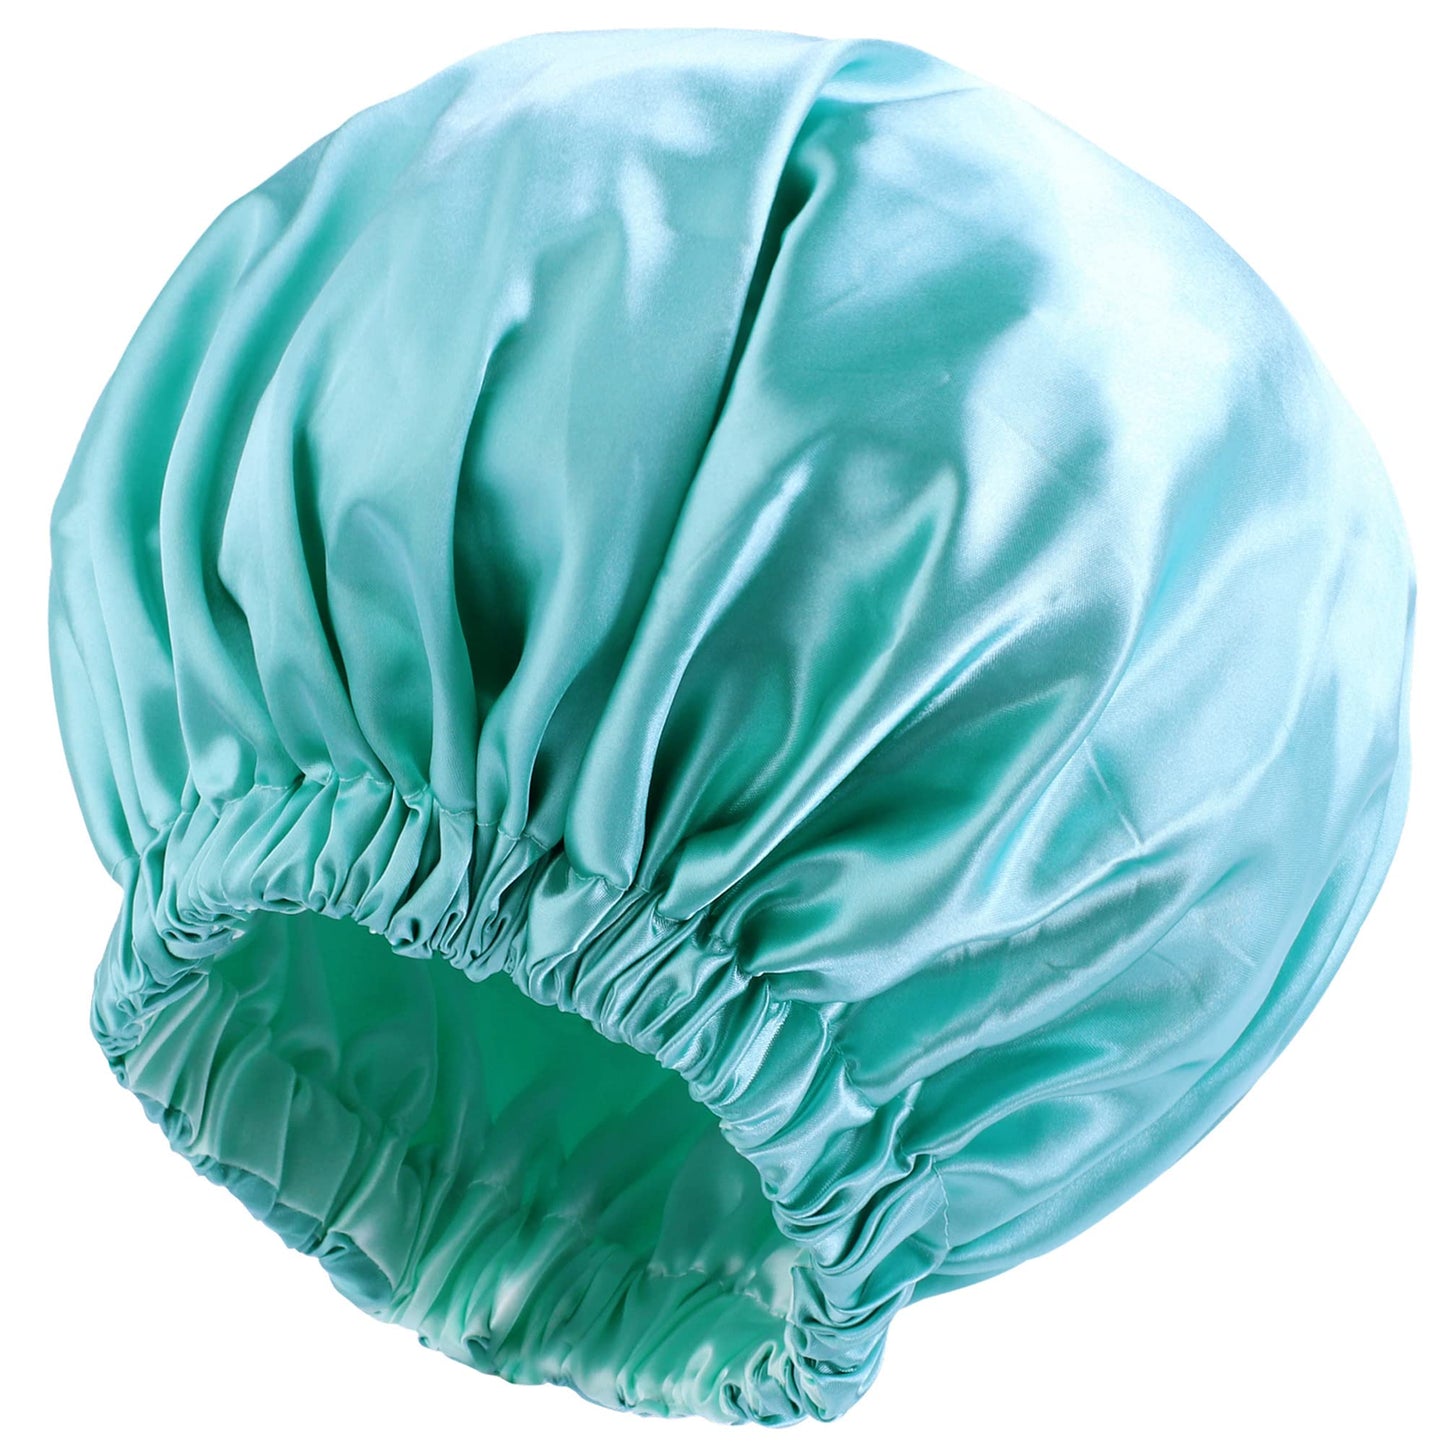 Satin Bonnet Silk Bonnet Hair Bonnet For Sleeping Satin Bonnet For Hair Bonnets For Women Silk Bonnet For Natural Hair